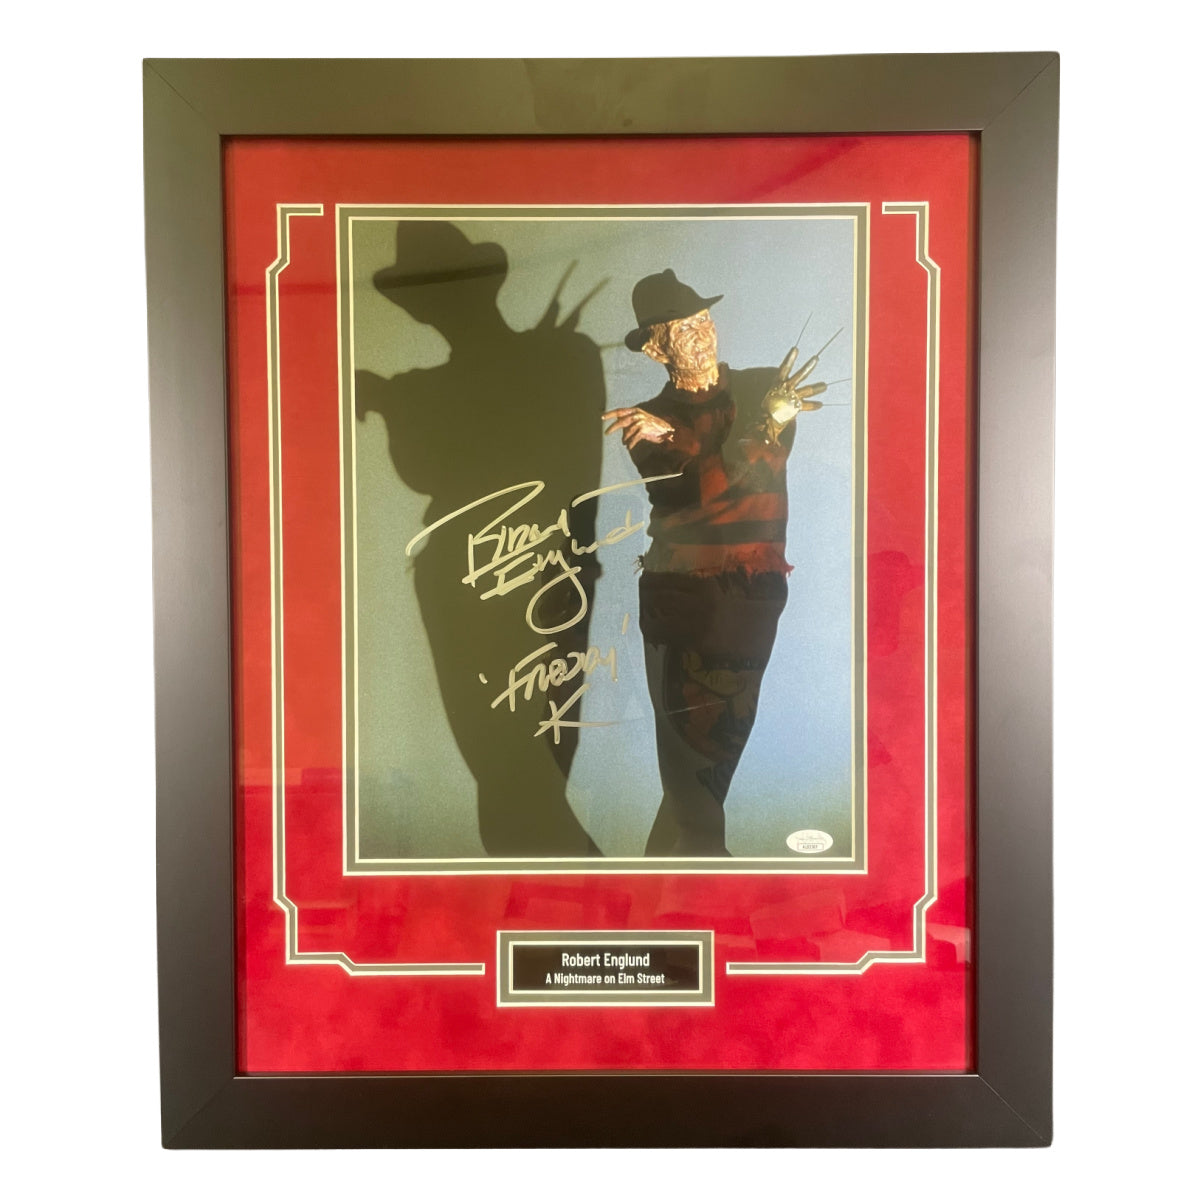 Robert Englund Signed 11x14 Photo A Nightmare on Elm Street Autographed JSA COA